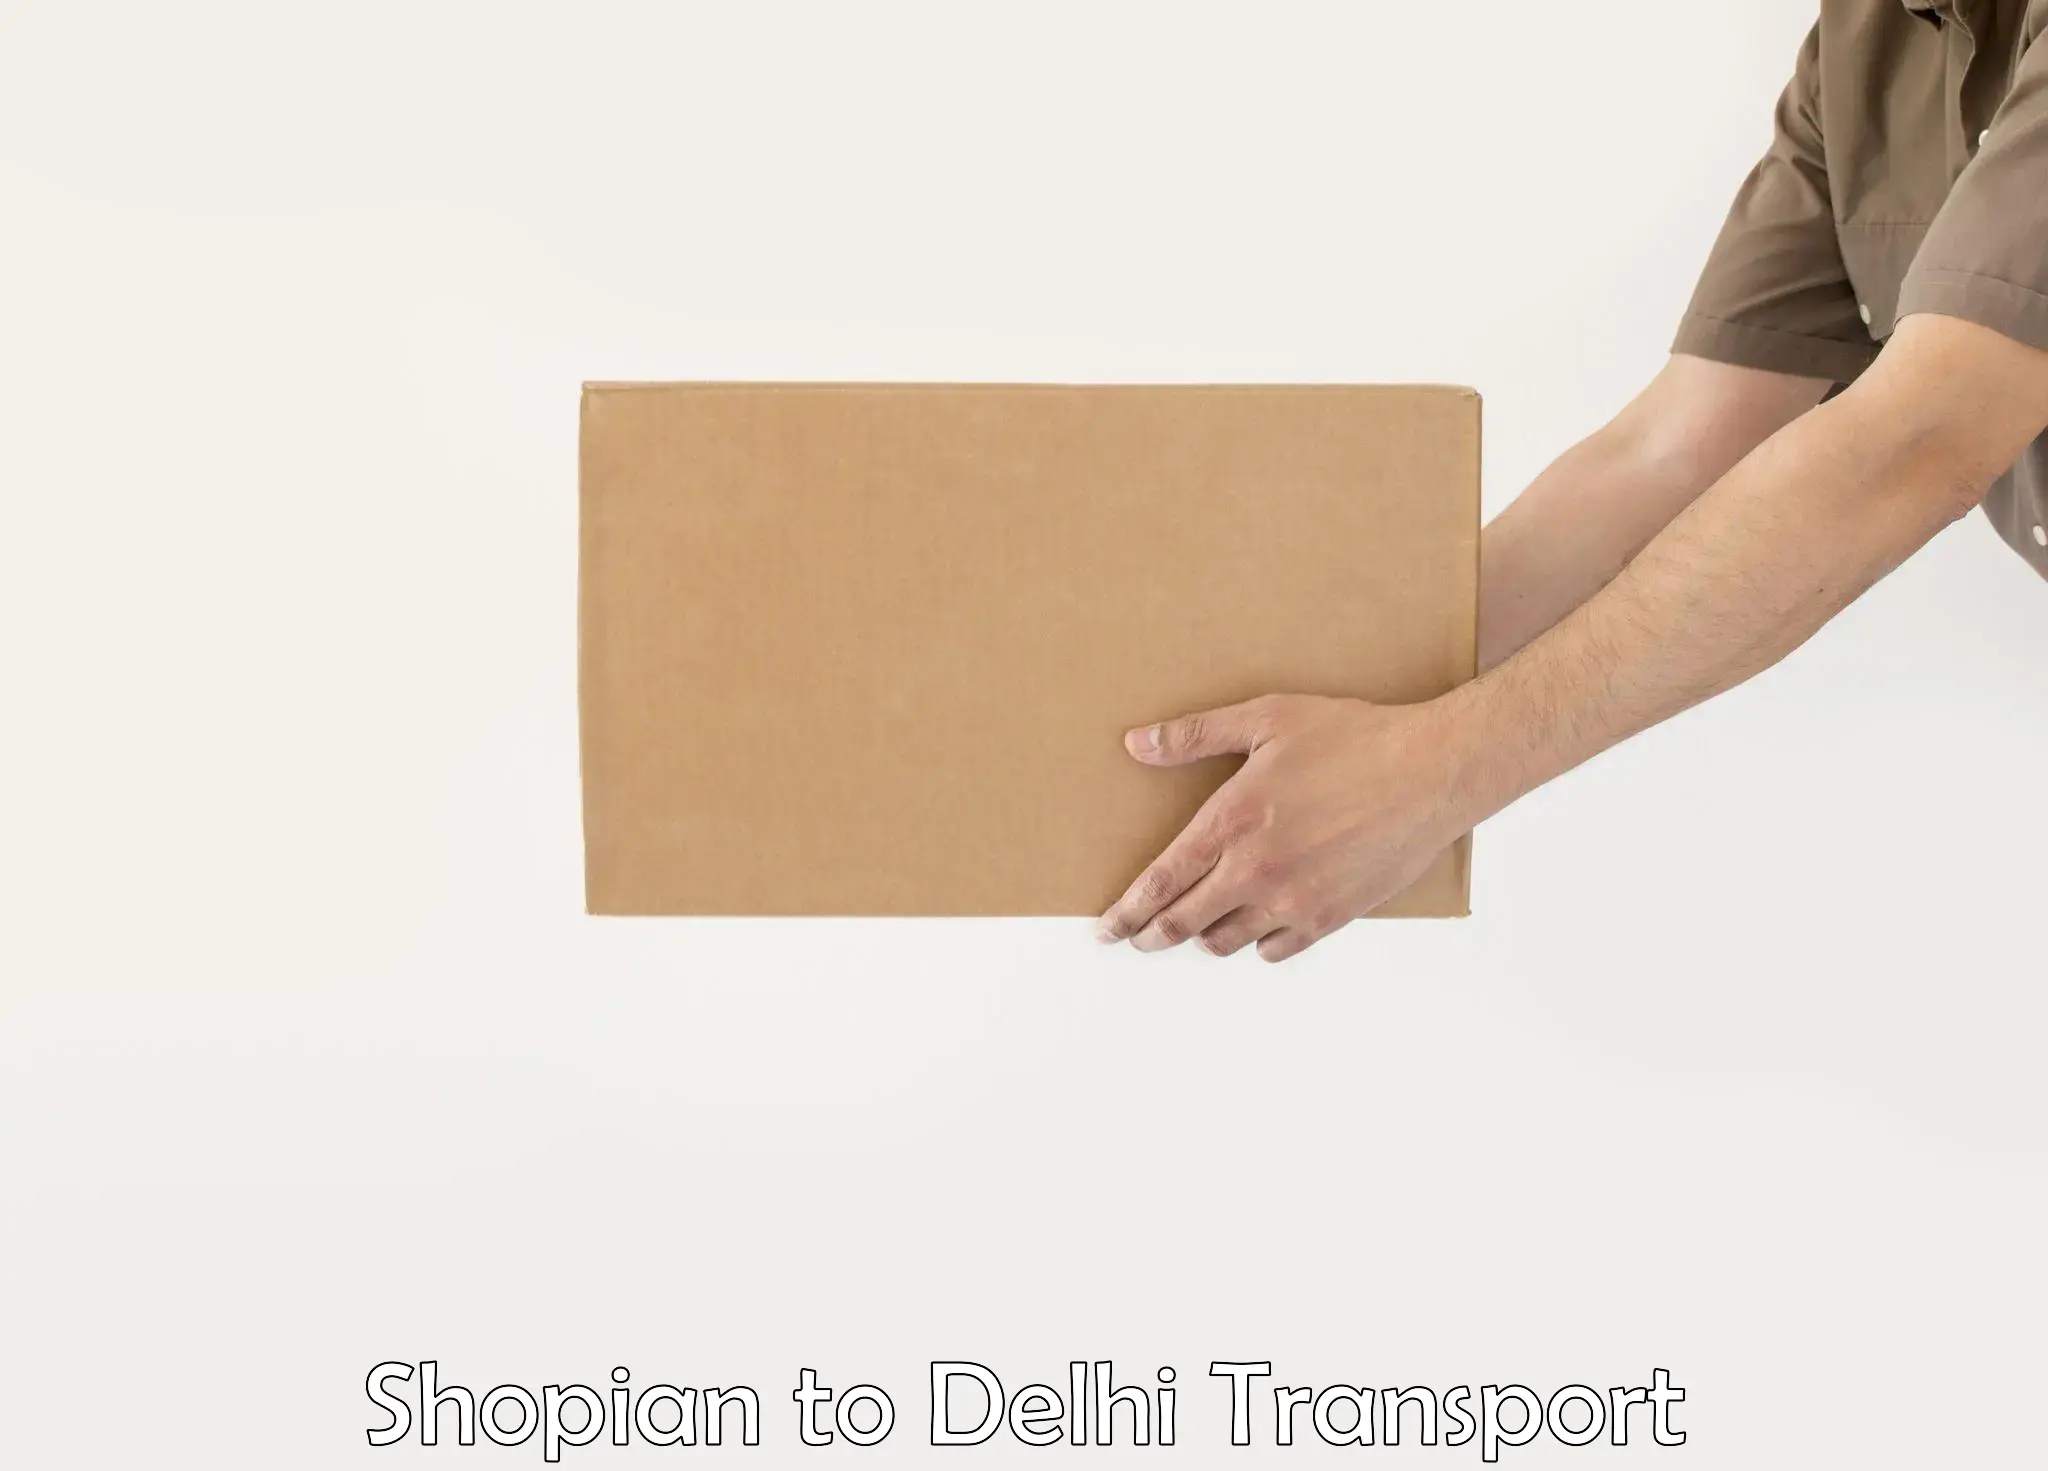 Cargo train transport services Shopian to East Delhi